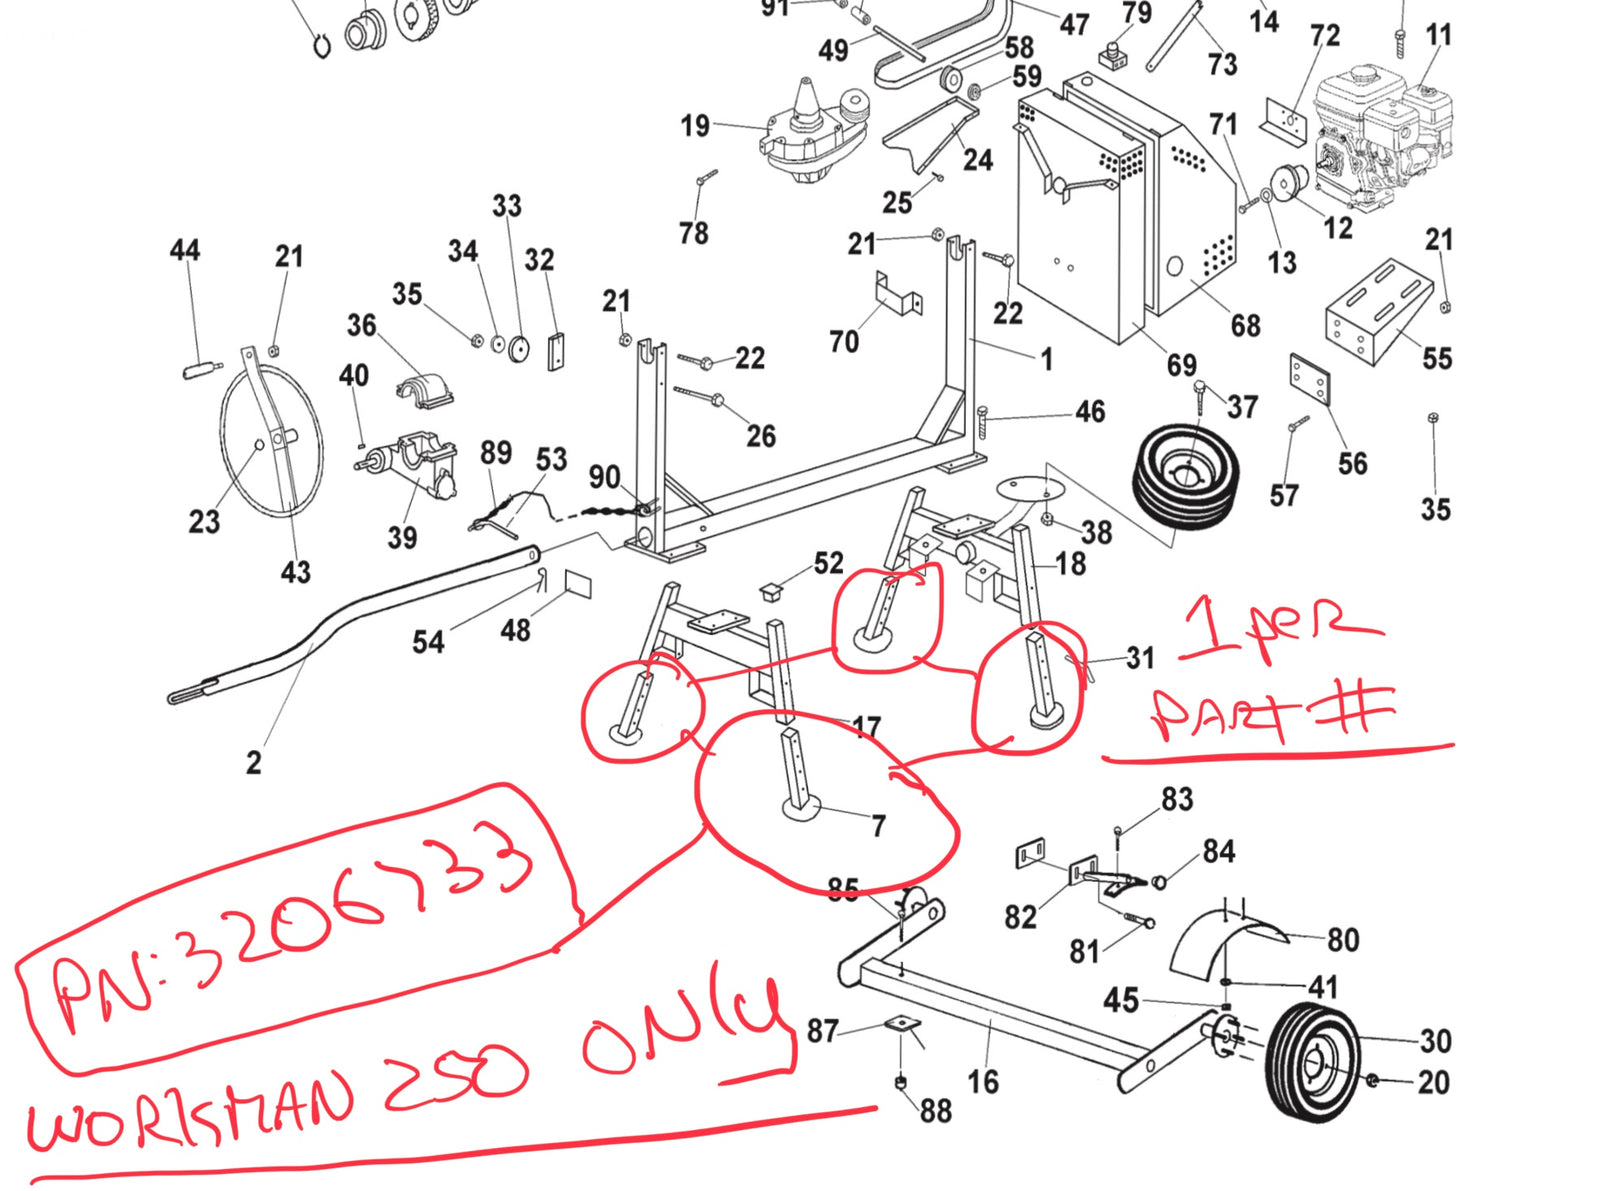 Part Number 3206733 - IMER Workman 250 Mixer - Stabilizing Leg